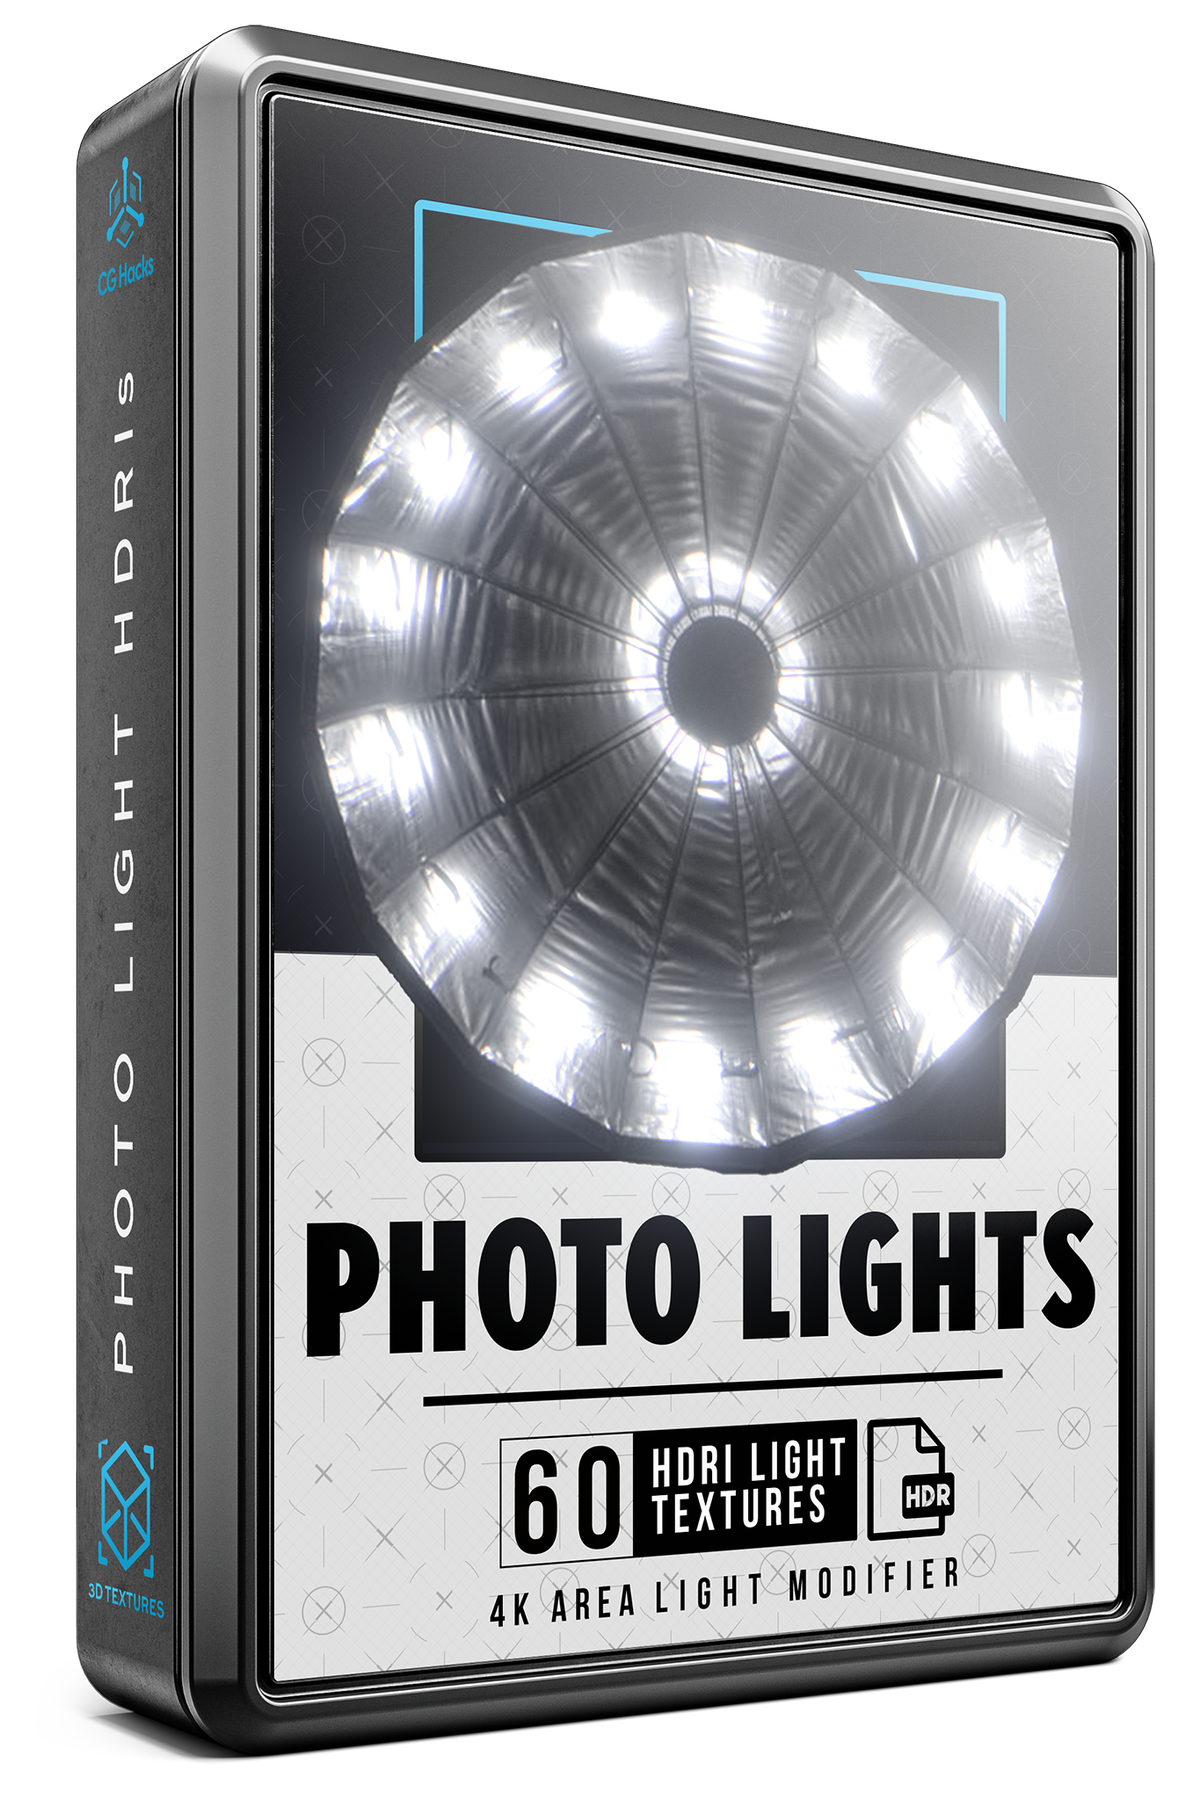 Photo Lights Pro HDRIs